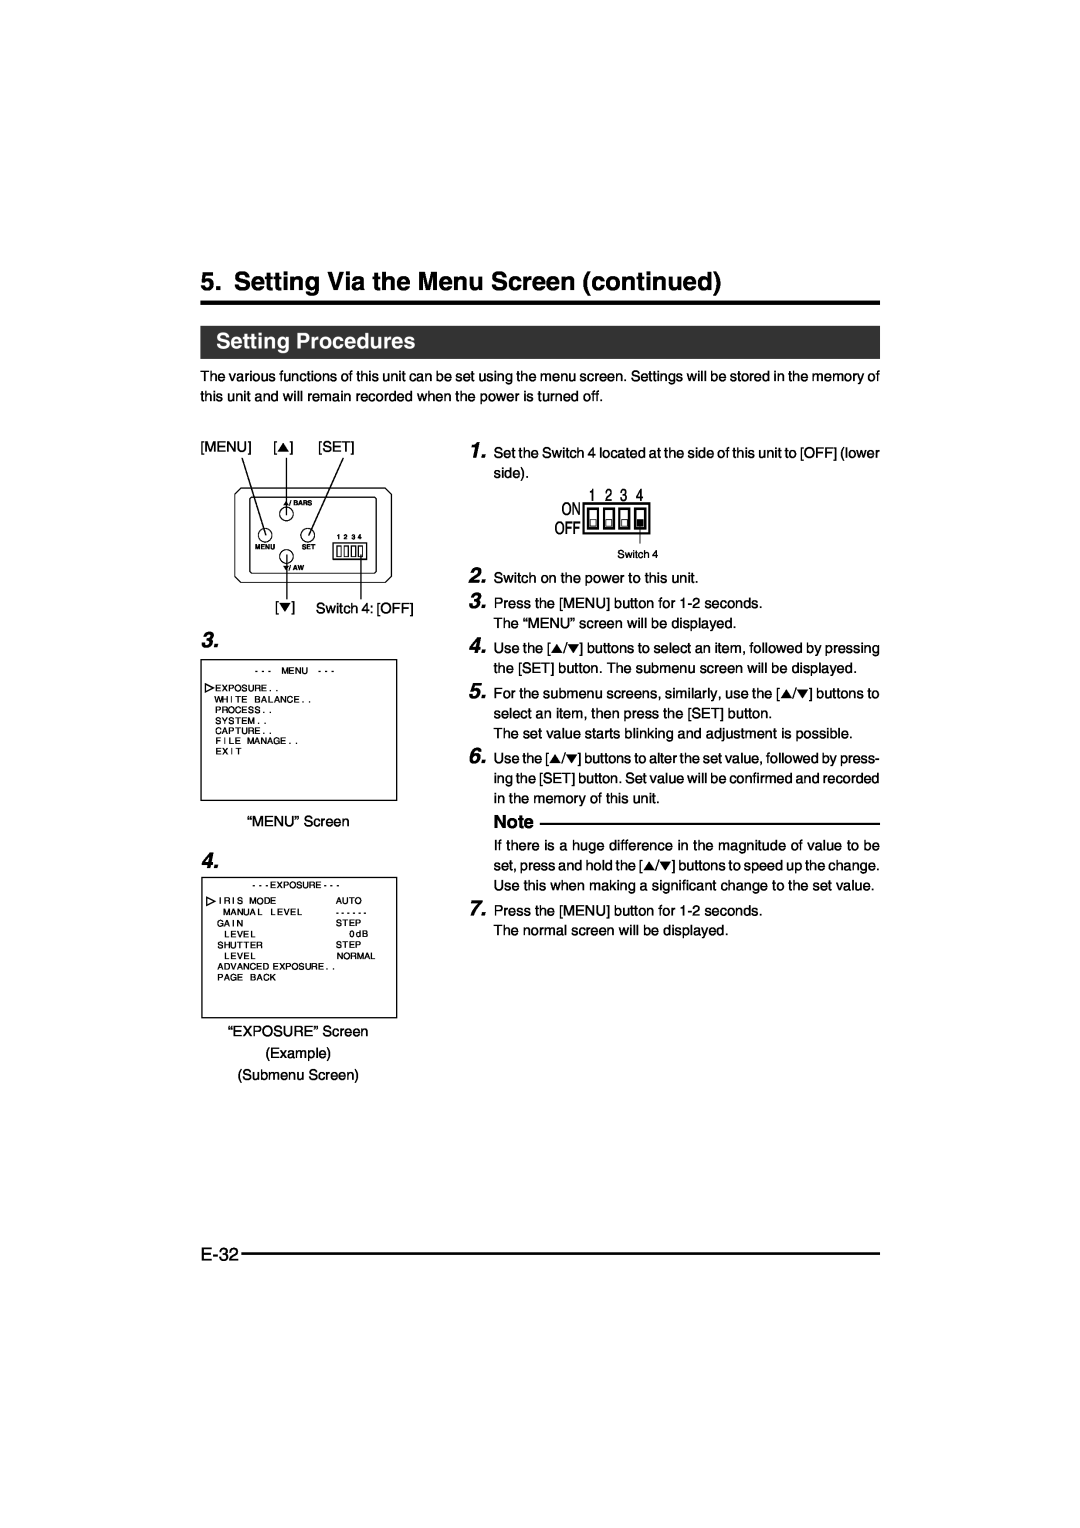 JVC KY-F550E instruction manual Setting Via the Menu Screen continued, Setting Procedures, 1 2 3, E-32 